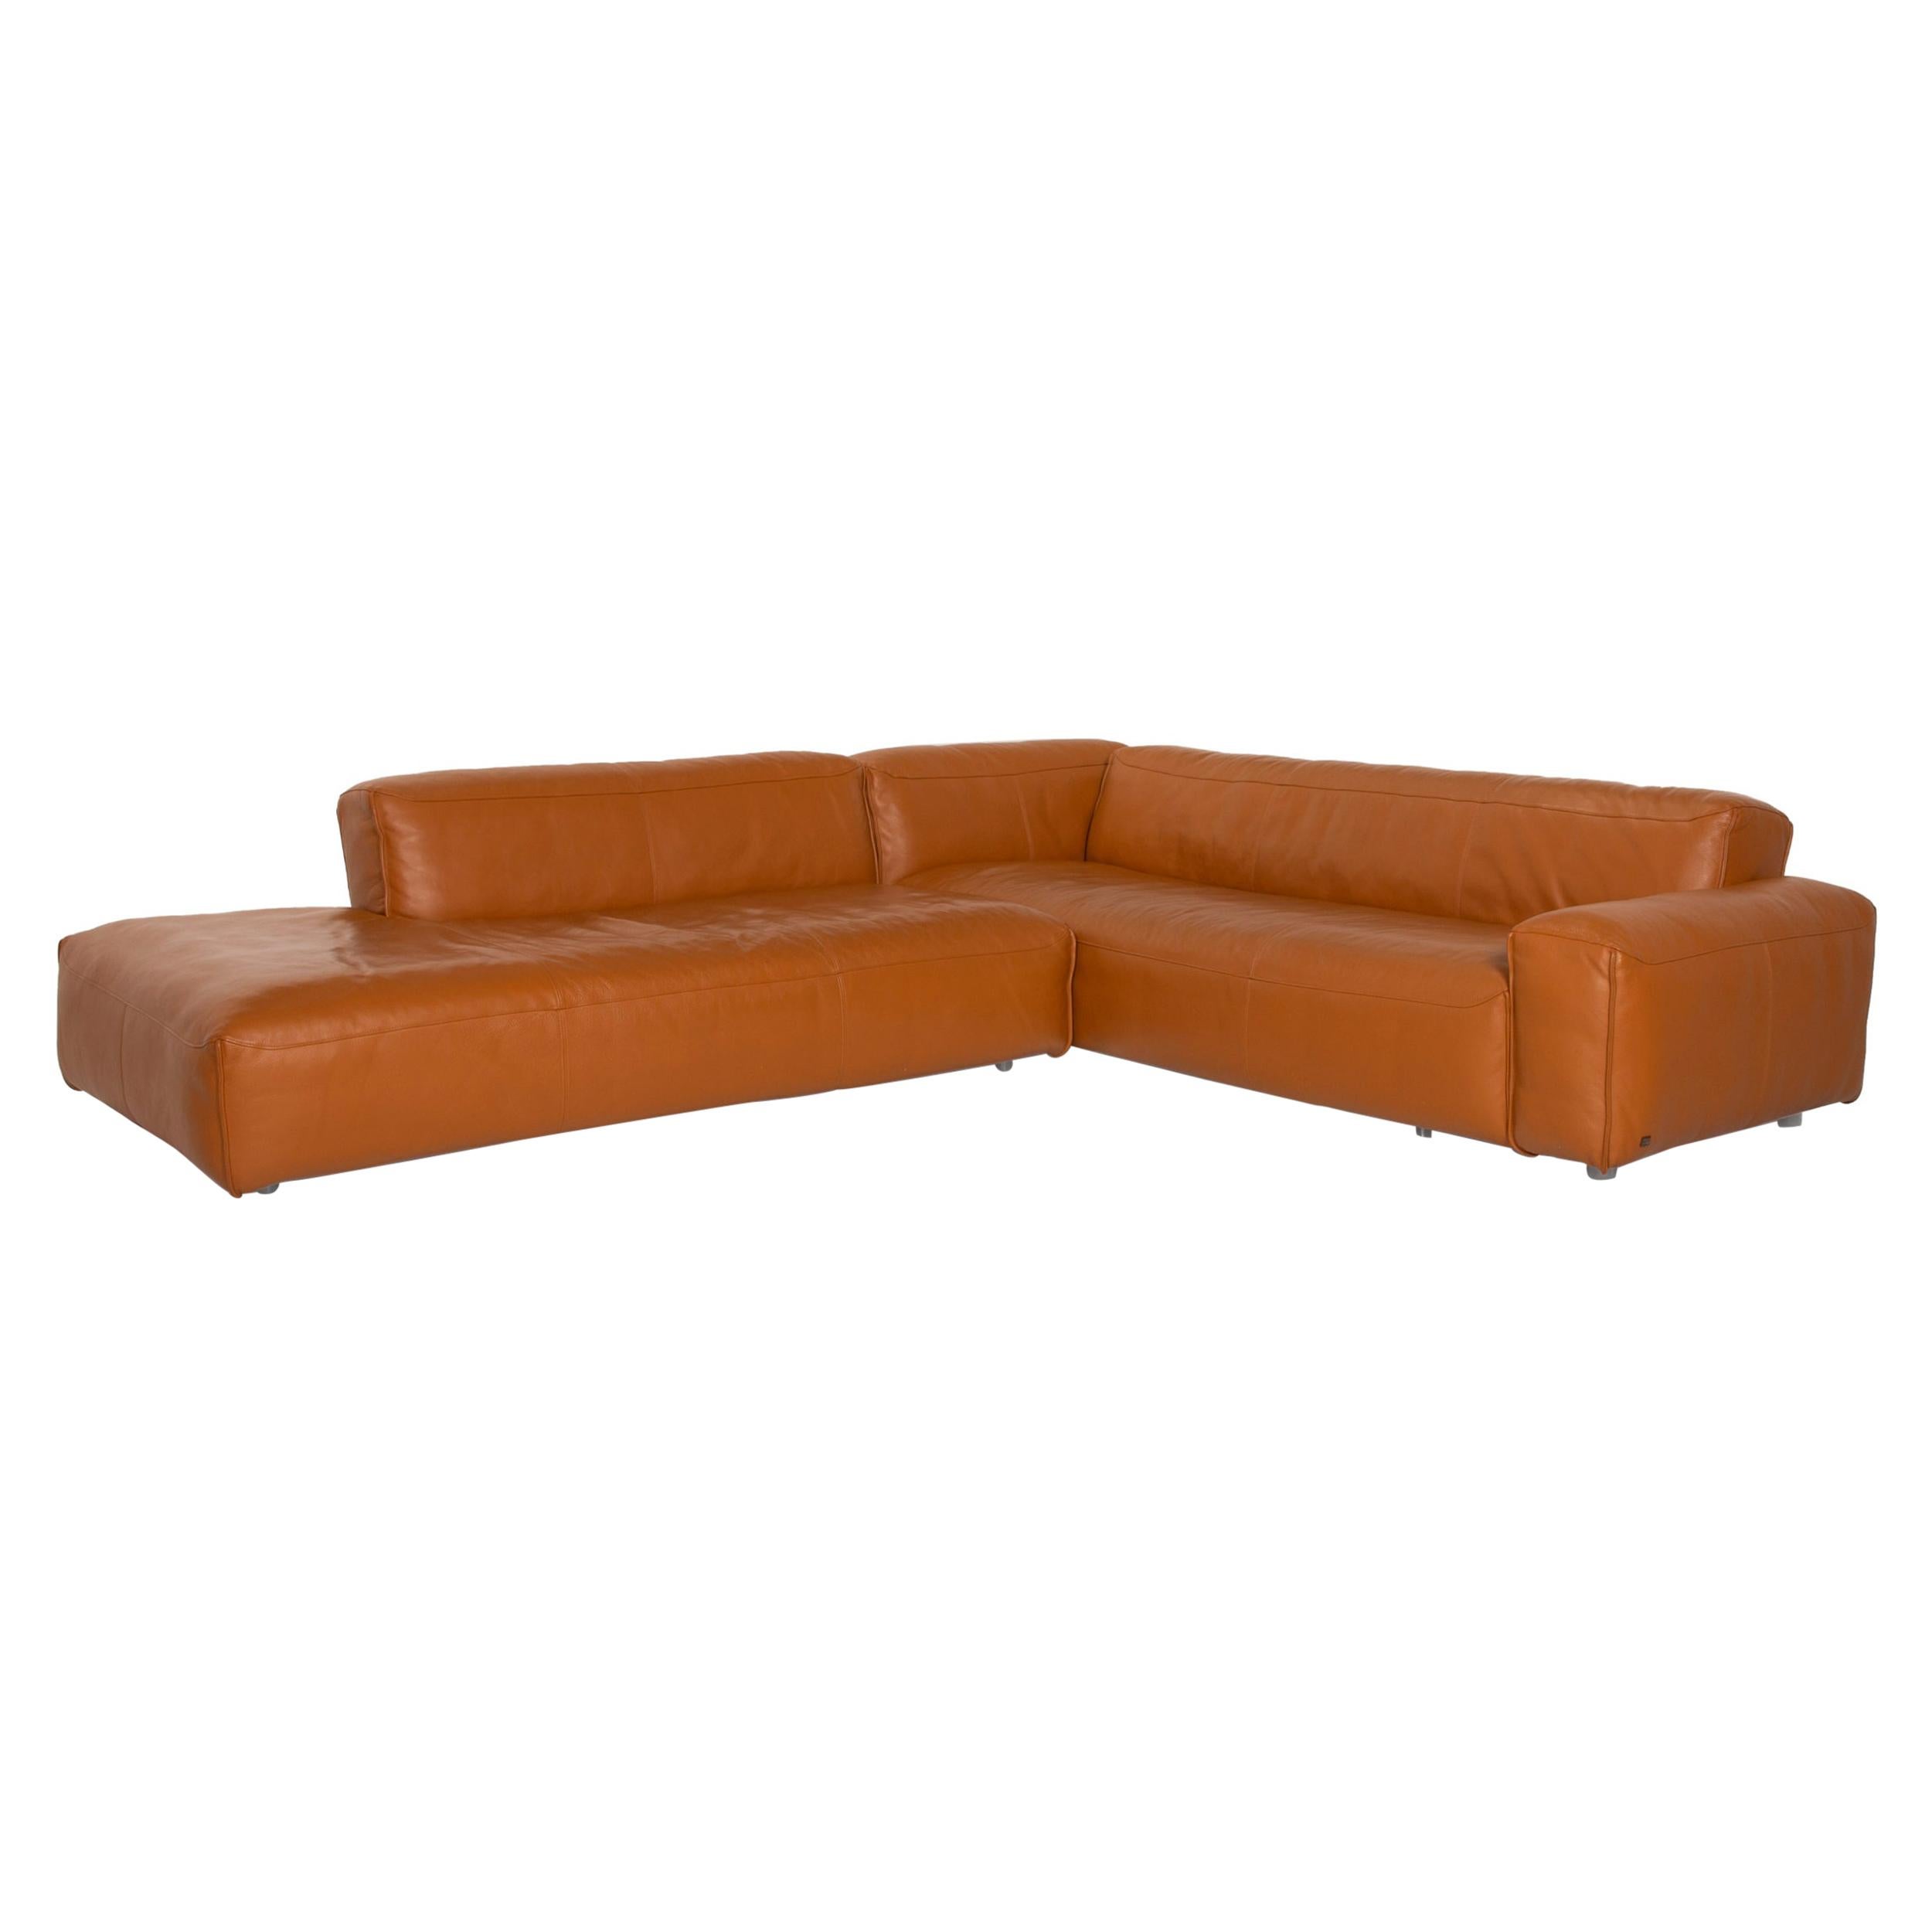 Rolf Benz Mio leather sofa cognac corner sofa For Sale